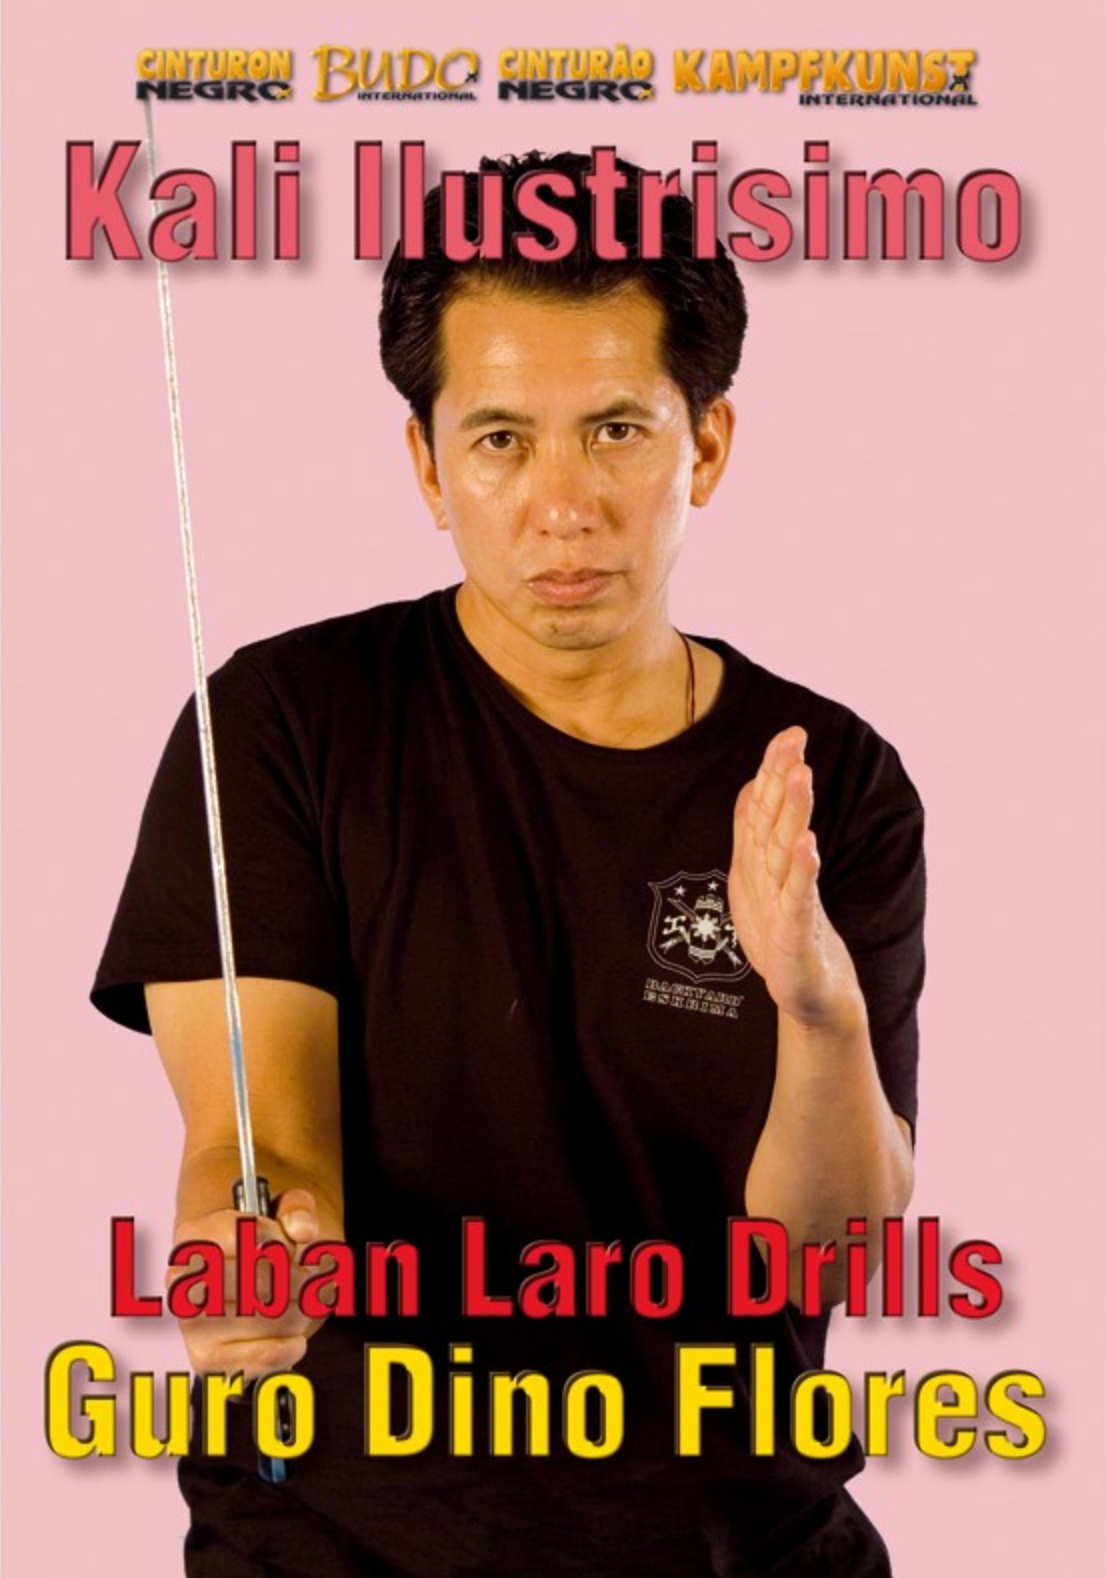 Kali Ilustrisimo Laban Laro Drills DVD with Dino Flores - Budovideos Inc